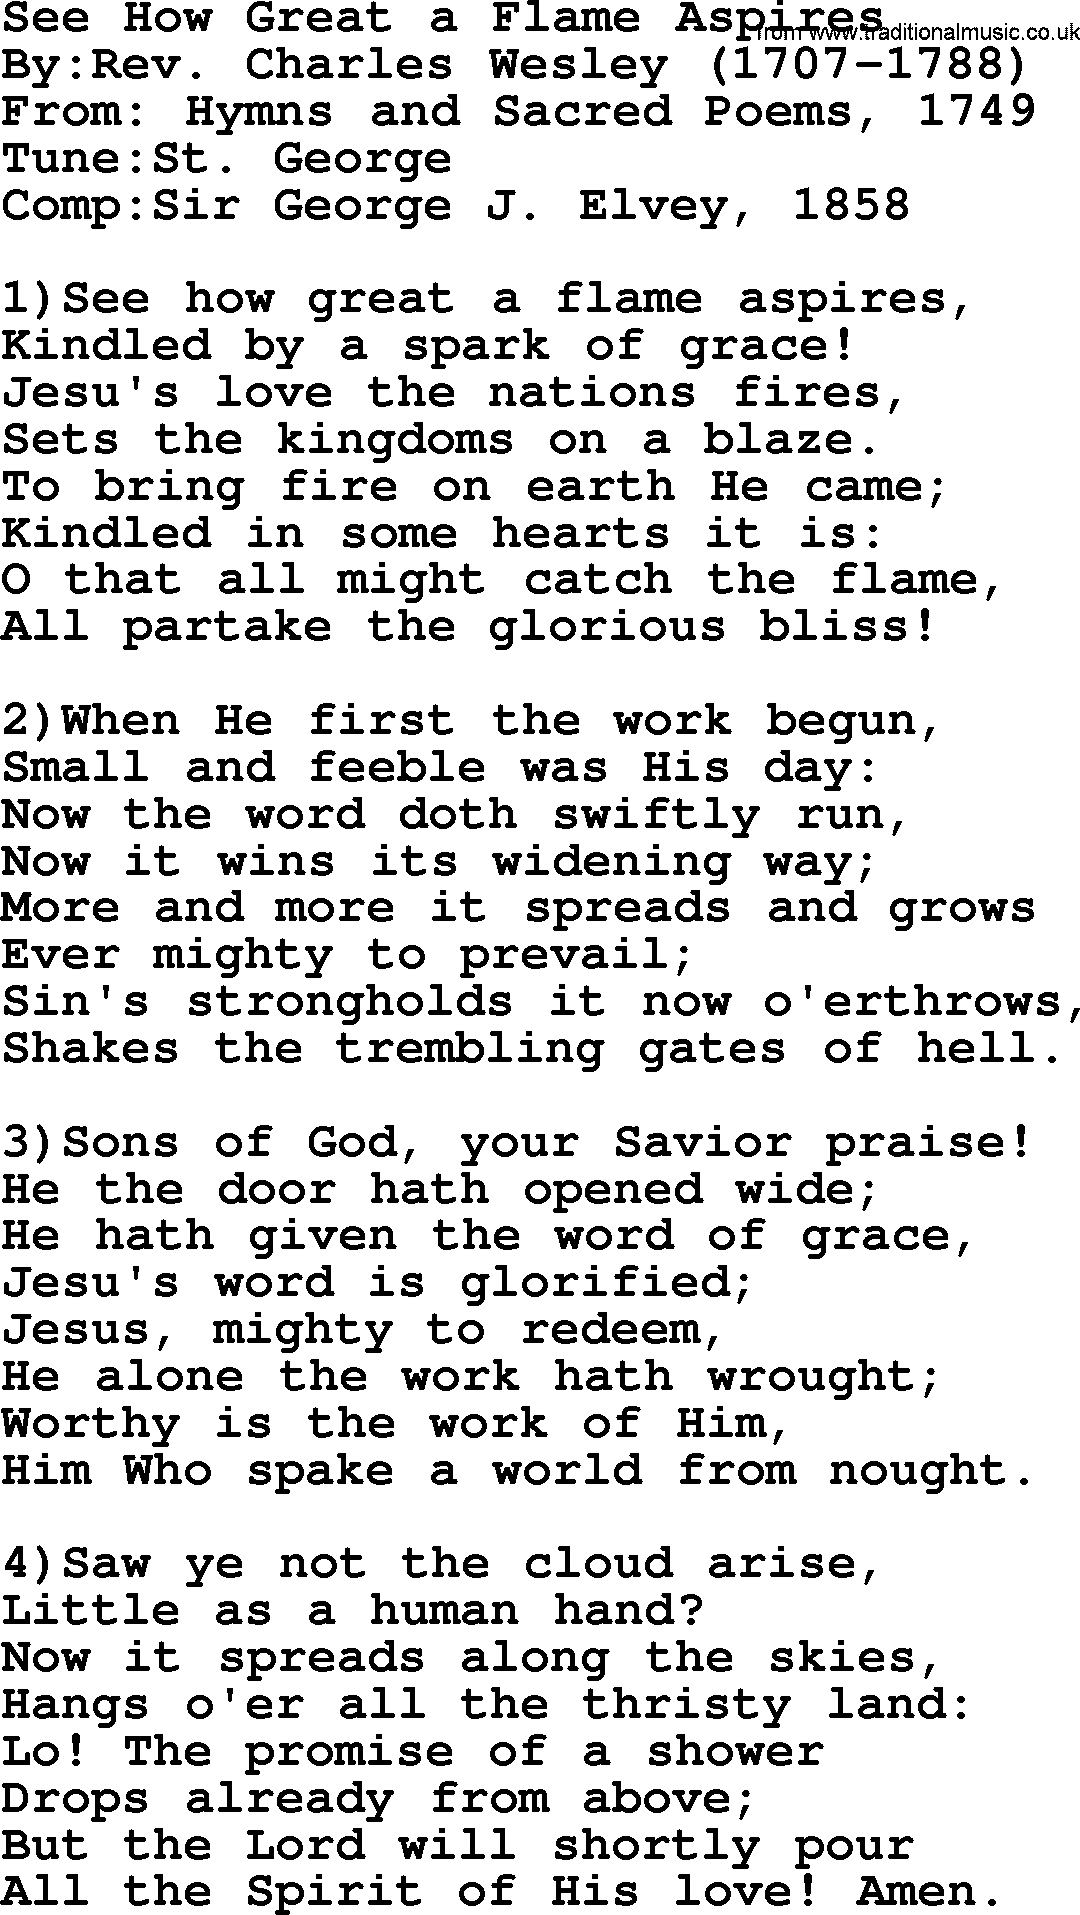 Methodist Hymn: See How Great A Flame Aspires, lyrics